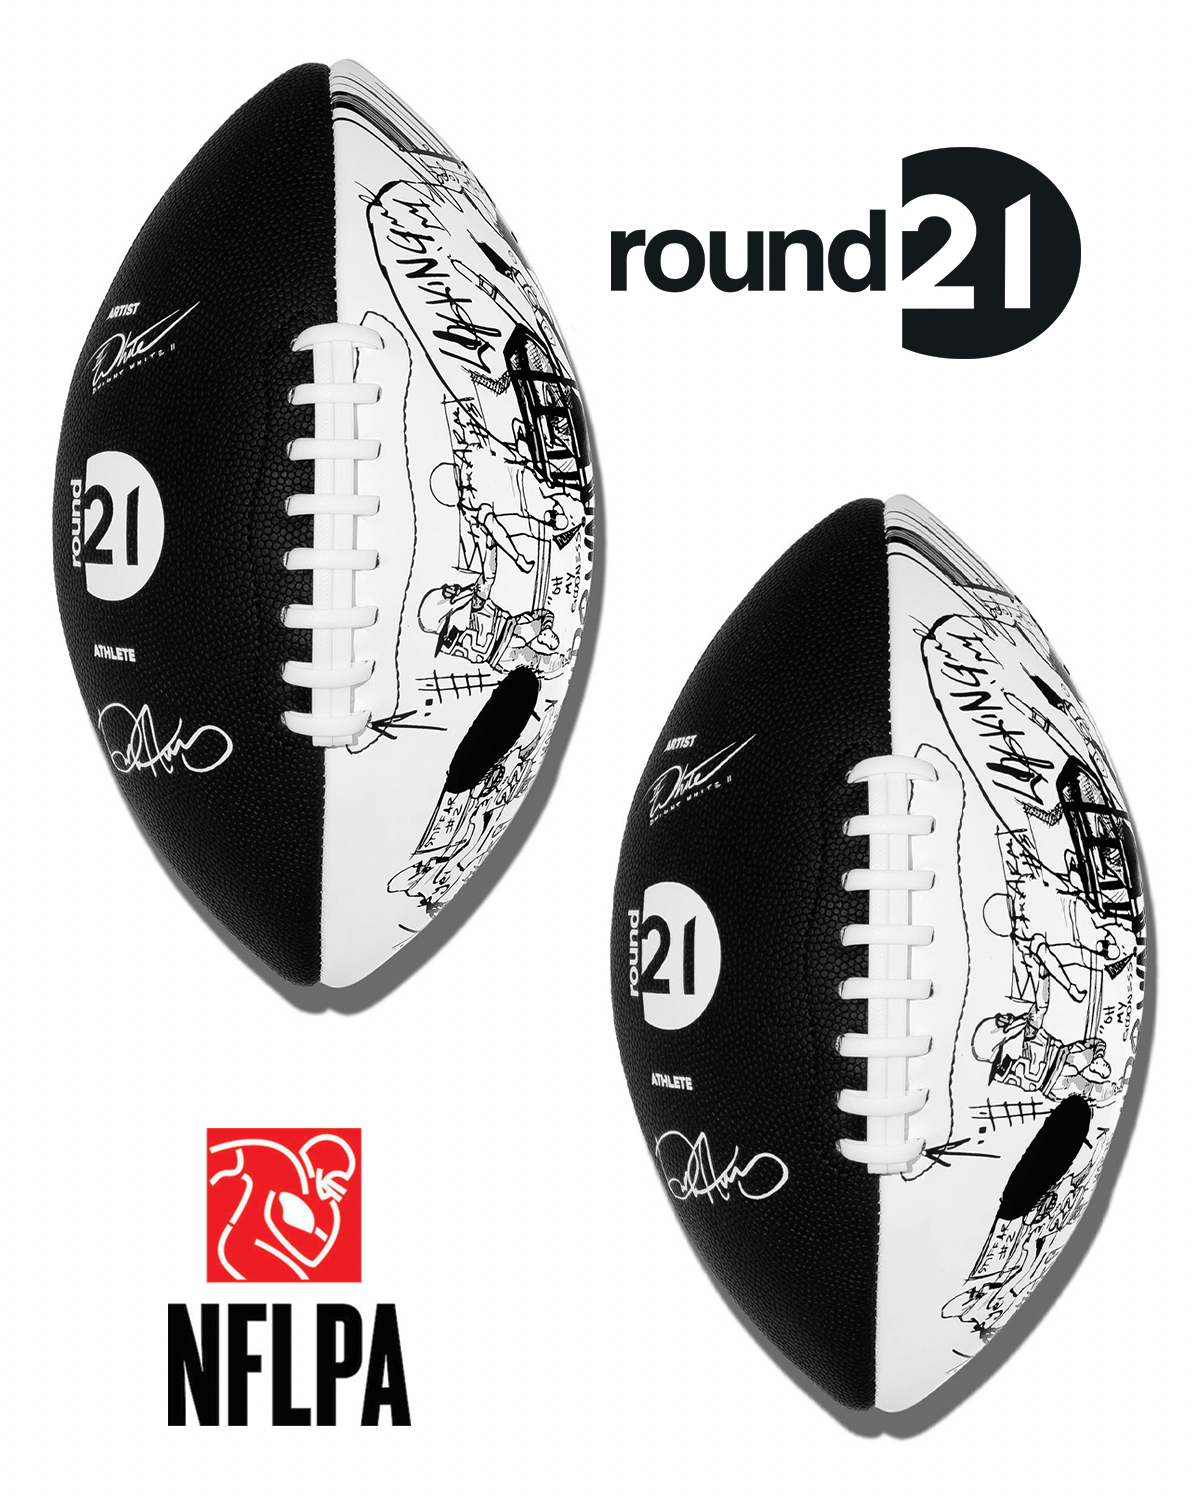 Official round21 x NFLPA Football - Derrick Henry